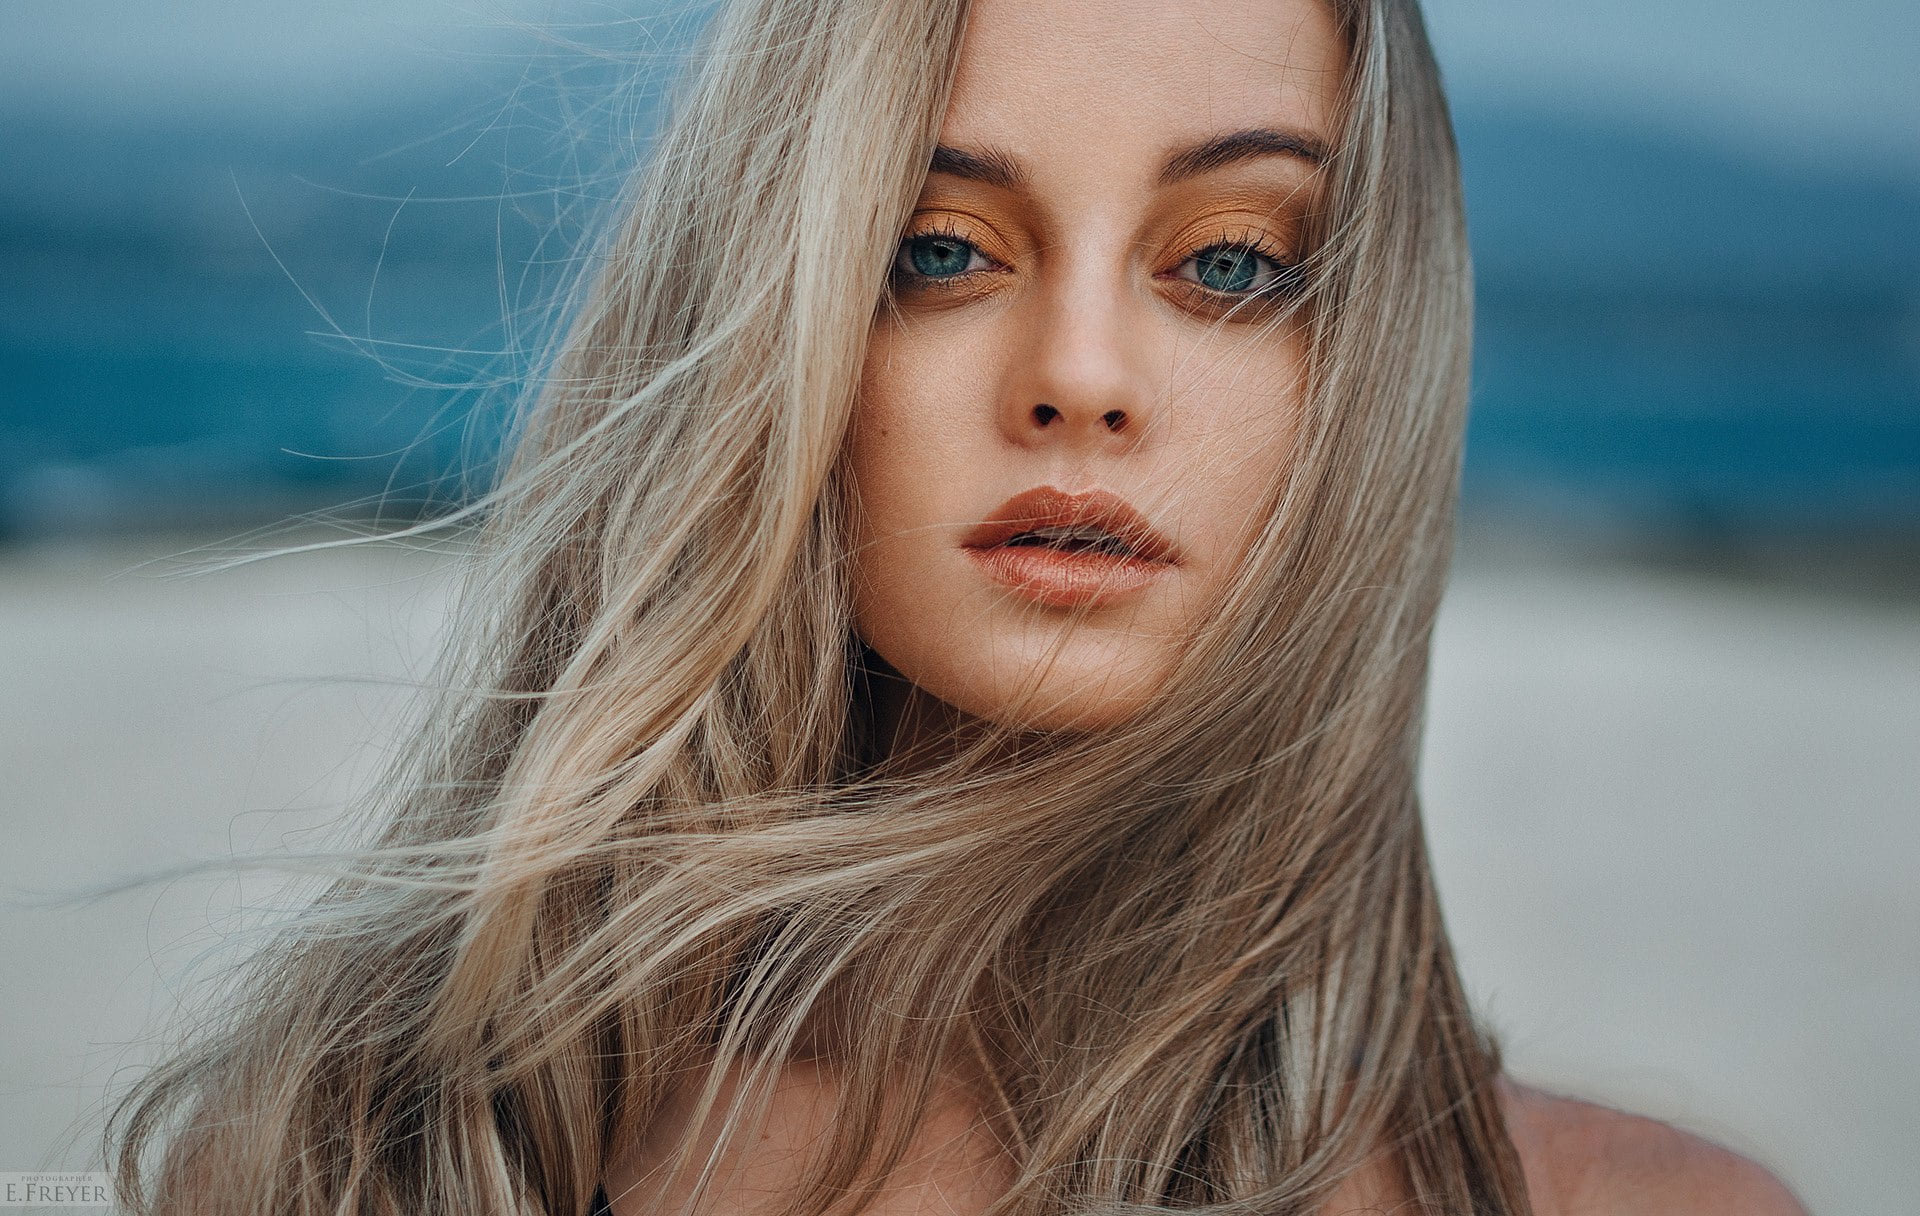 Free Download Hd Wallpaper Women Face Blonde Portrait Evgeny Freyer Blue Eyes Hair